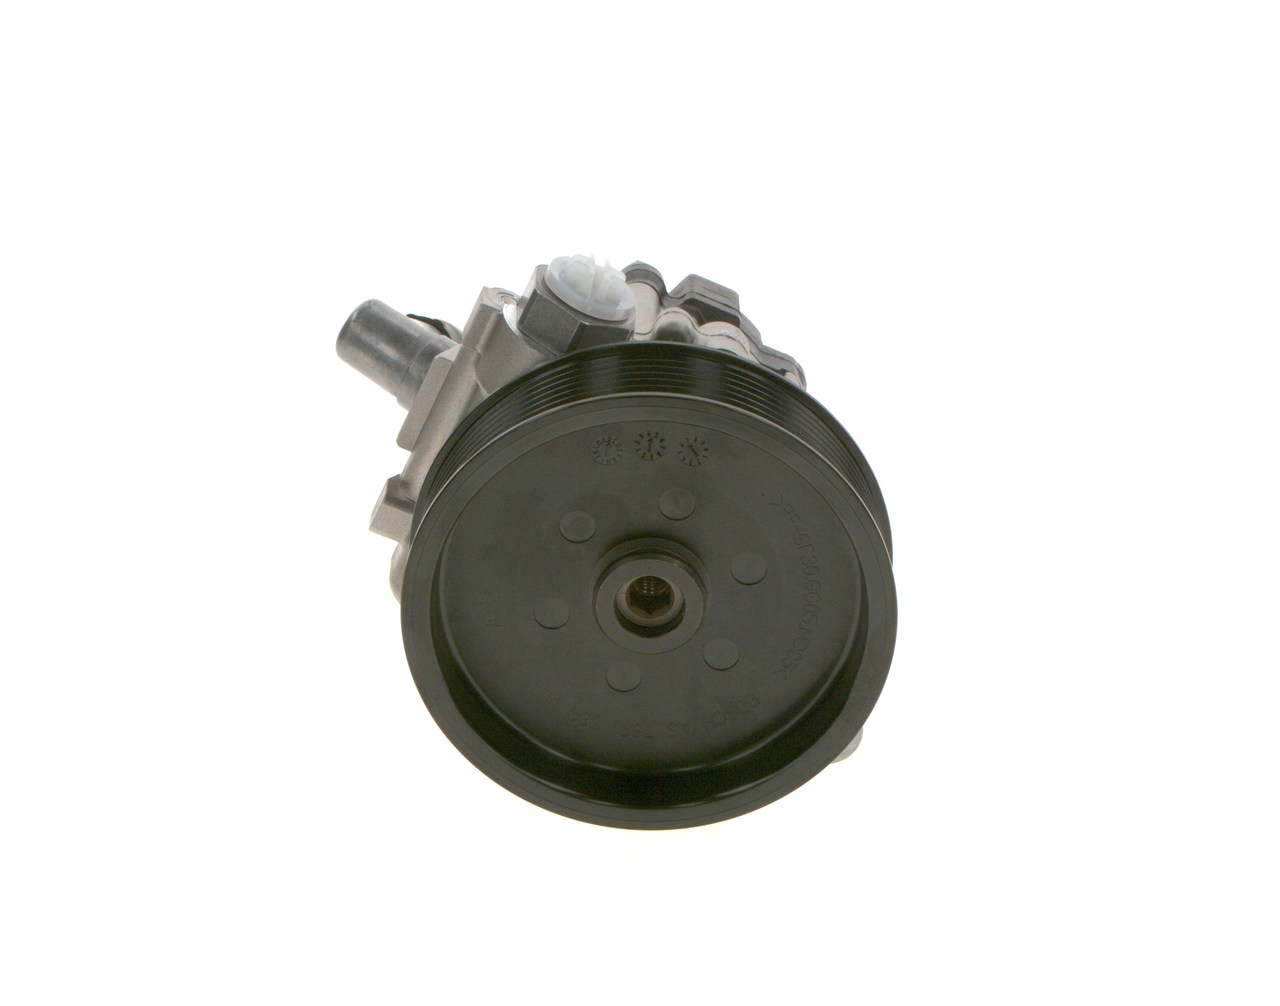 BOSCH K S01 000 673 Power steering pump Hydraulic, Pressure-limiting Valve, Vane Pump, Clockwise rotation